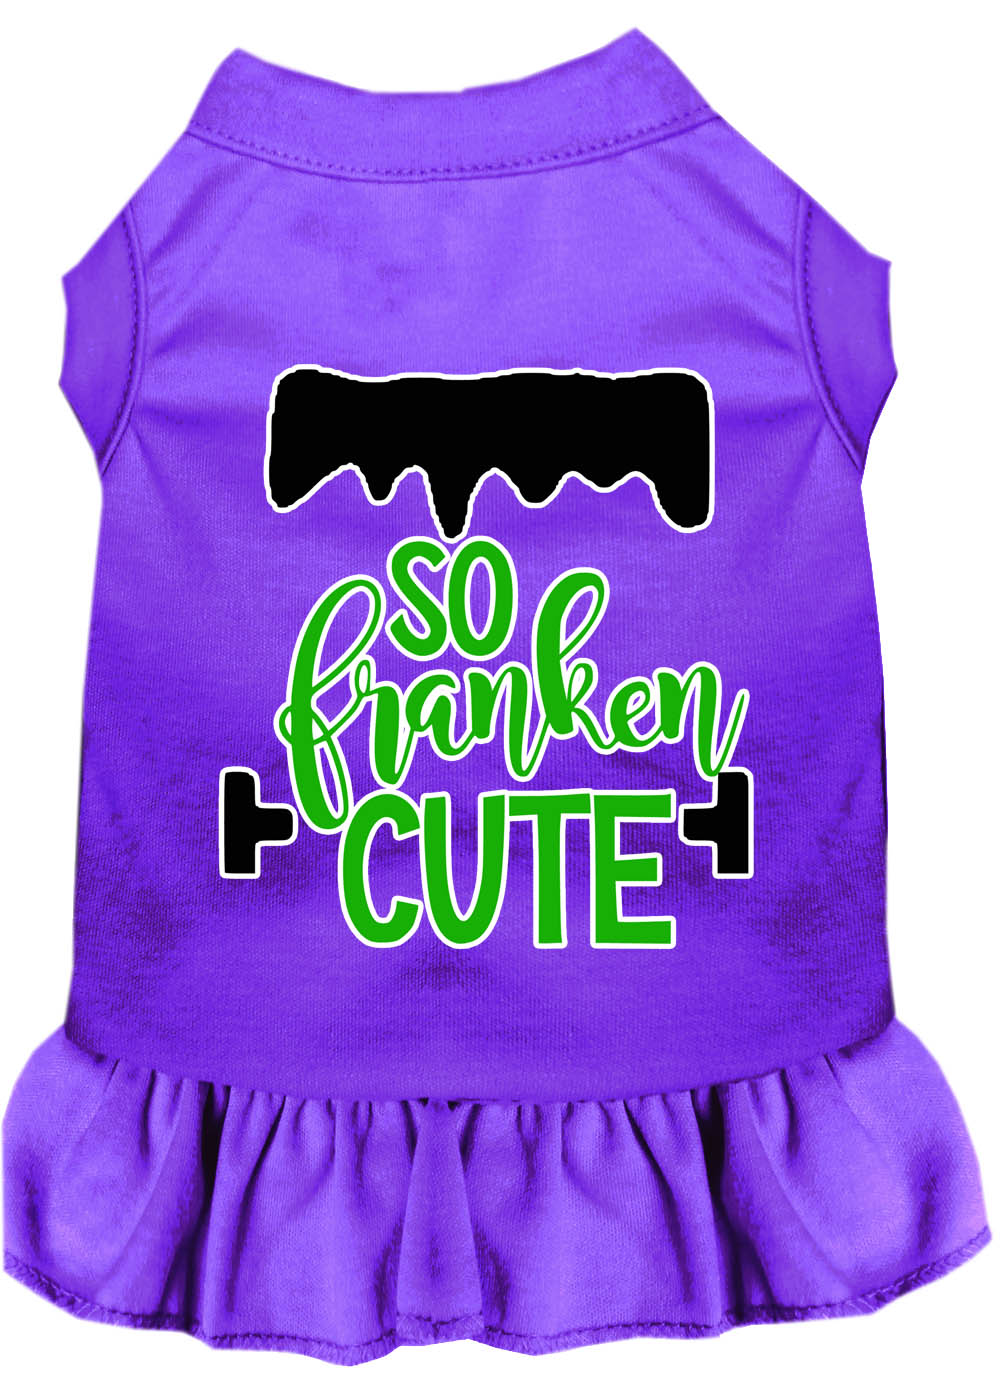 So Franken Cute Screen Print Dog Dress Purple XXXL